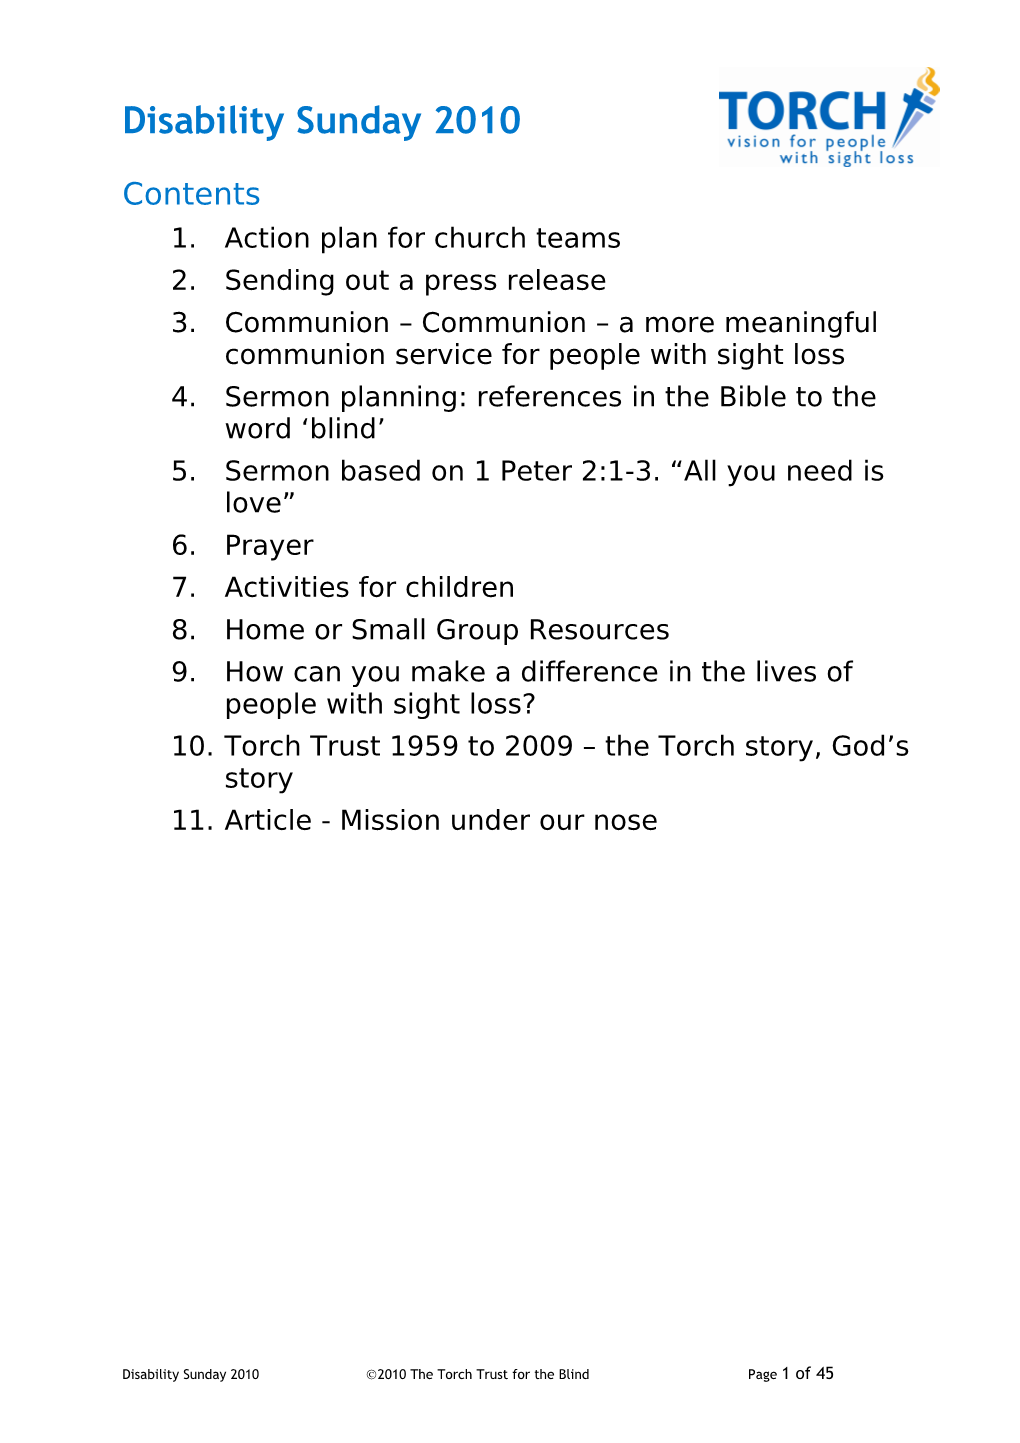 Action Plan for Church Teams